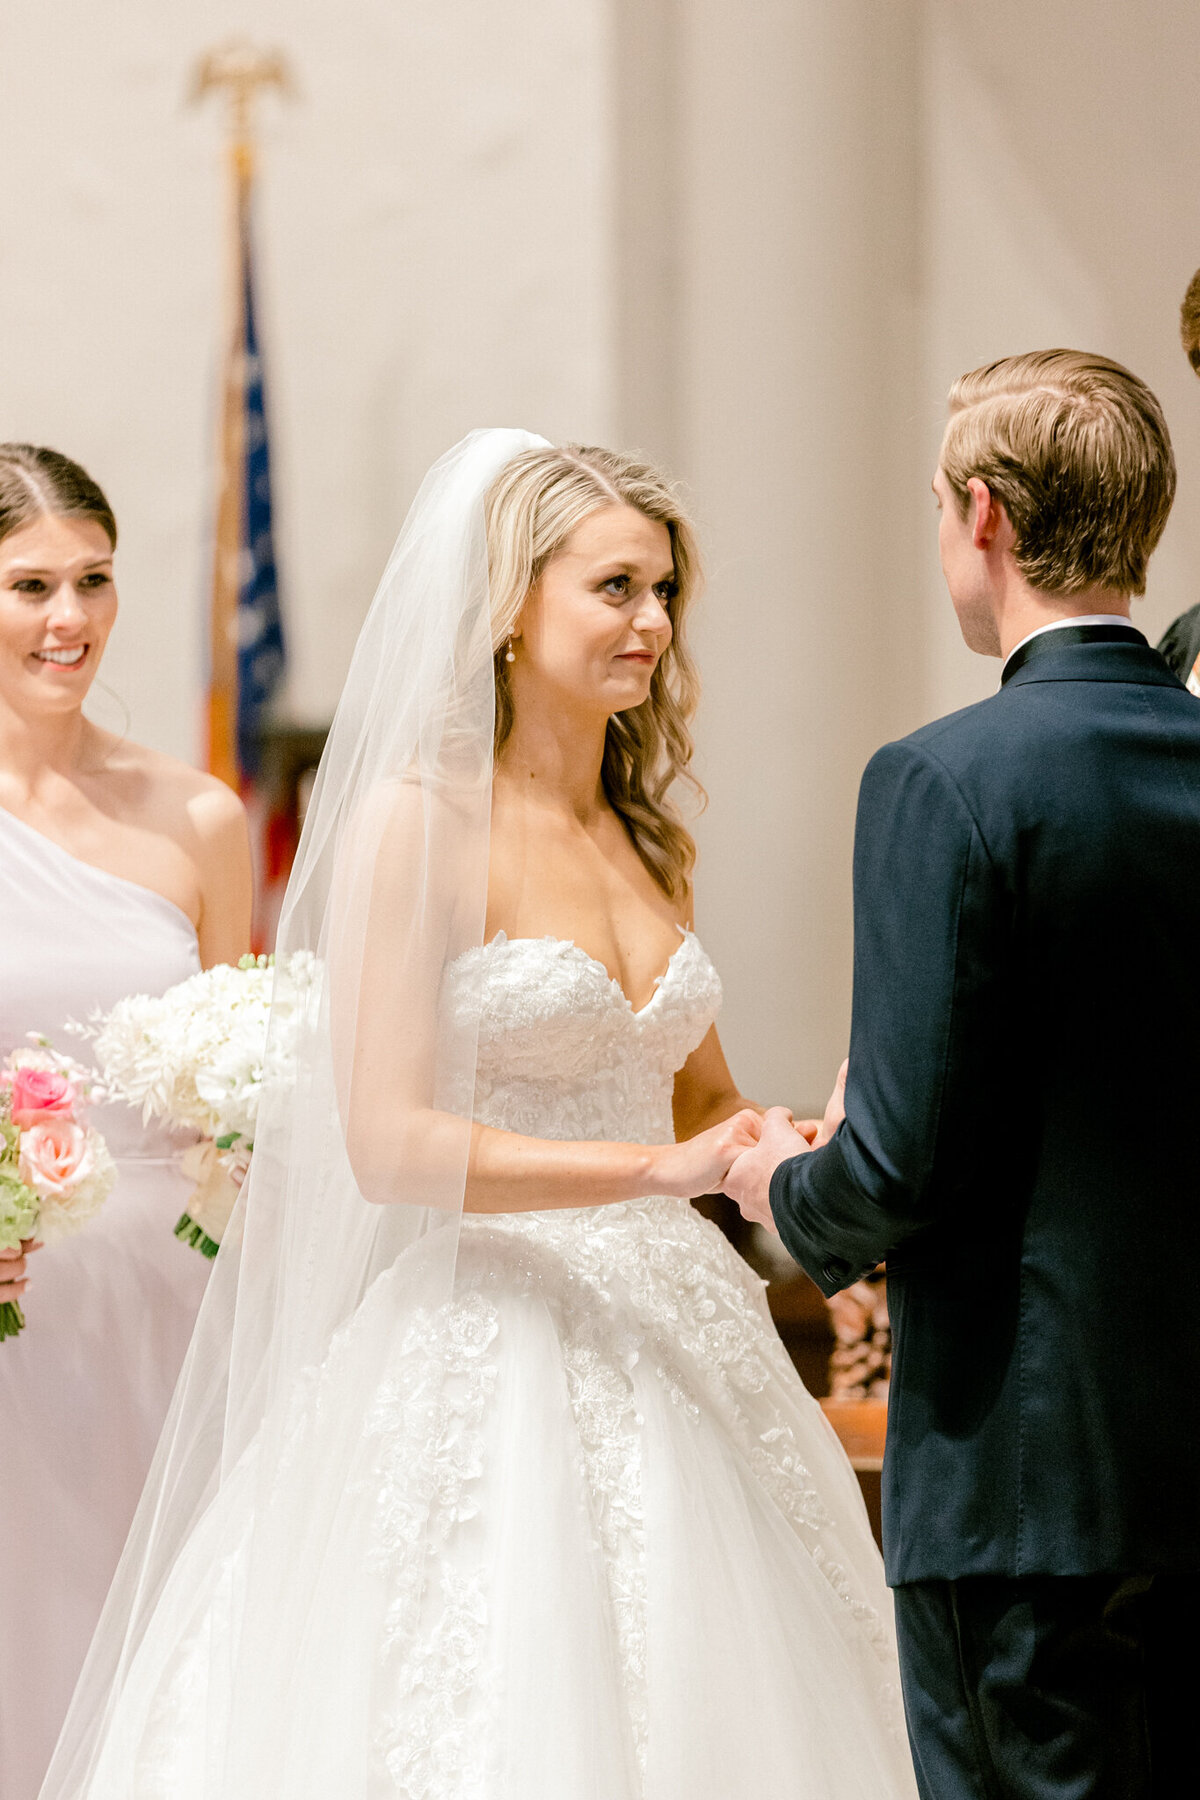 Shelby & Thomas's Wedding at HPUMC The Room on Main | Dallas Wedding Photographer | Sami Kathryn Photography-123